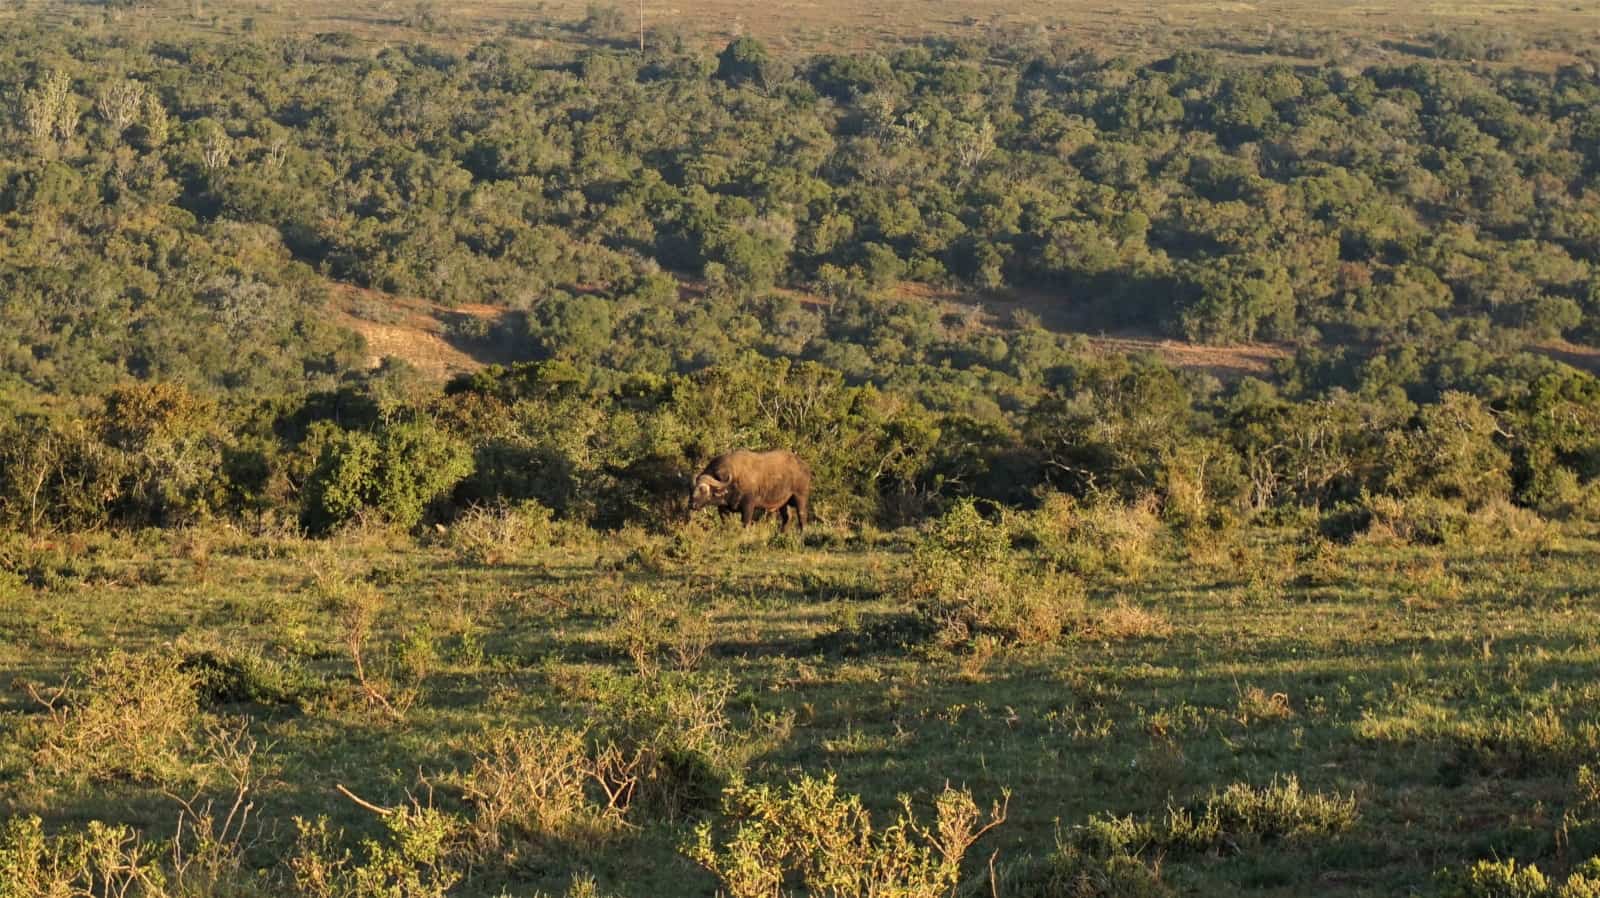 Can you spot the buffalo? Addo Elephant National Park